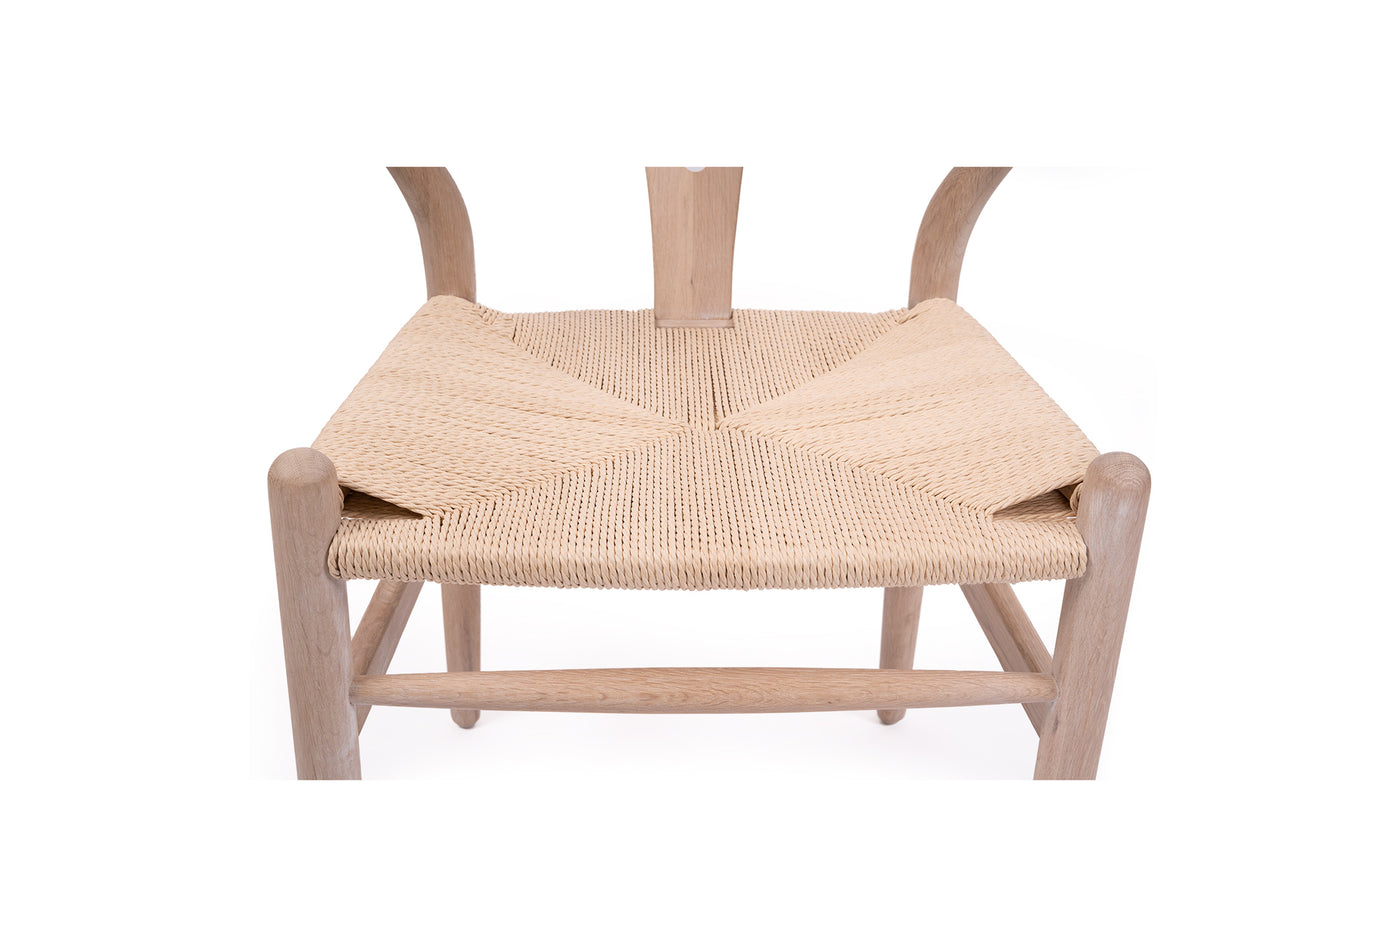 Cross Over Designer Replica Chair - White Coastal Oak